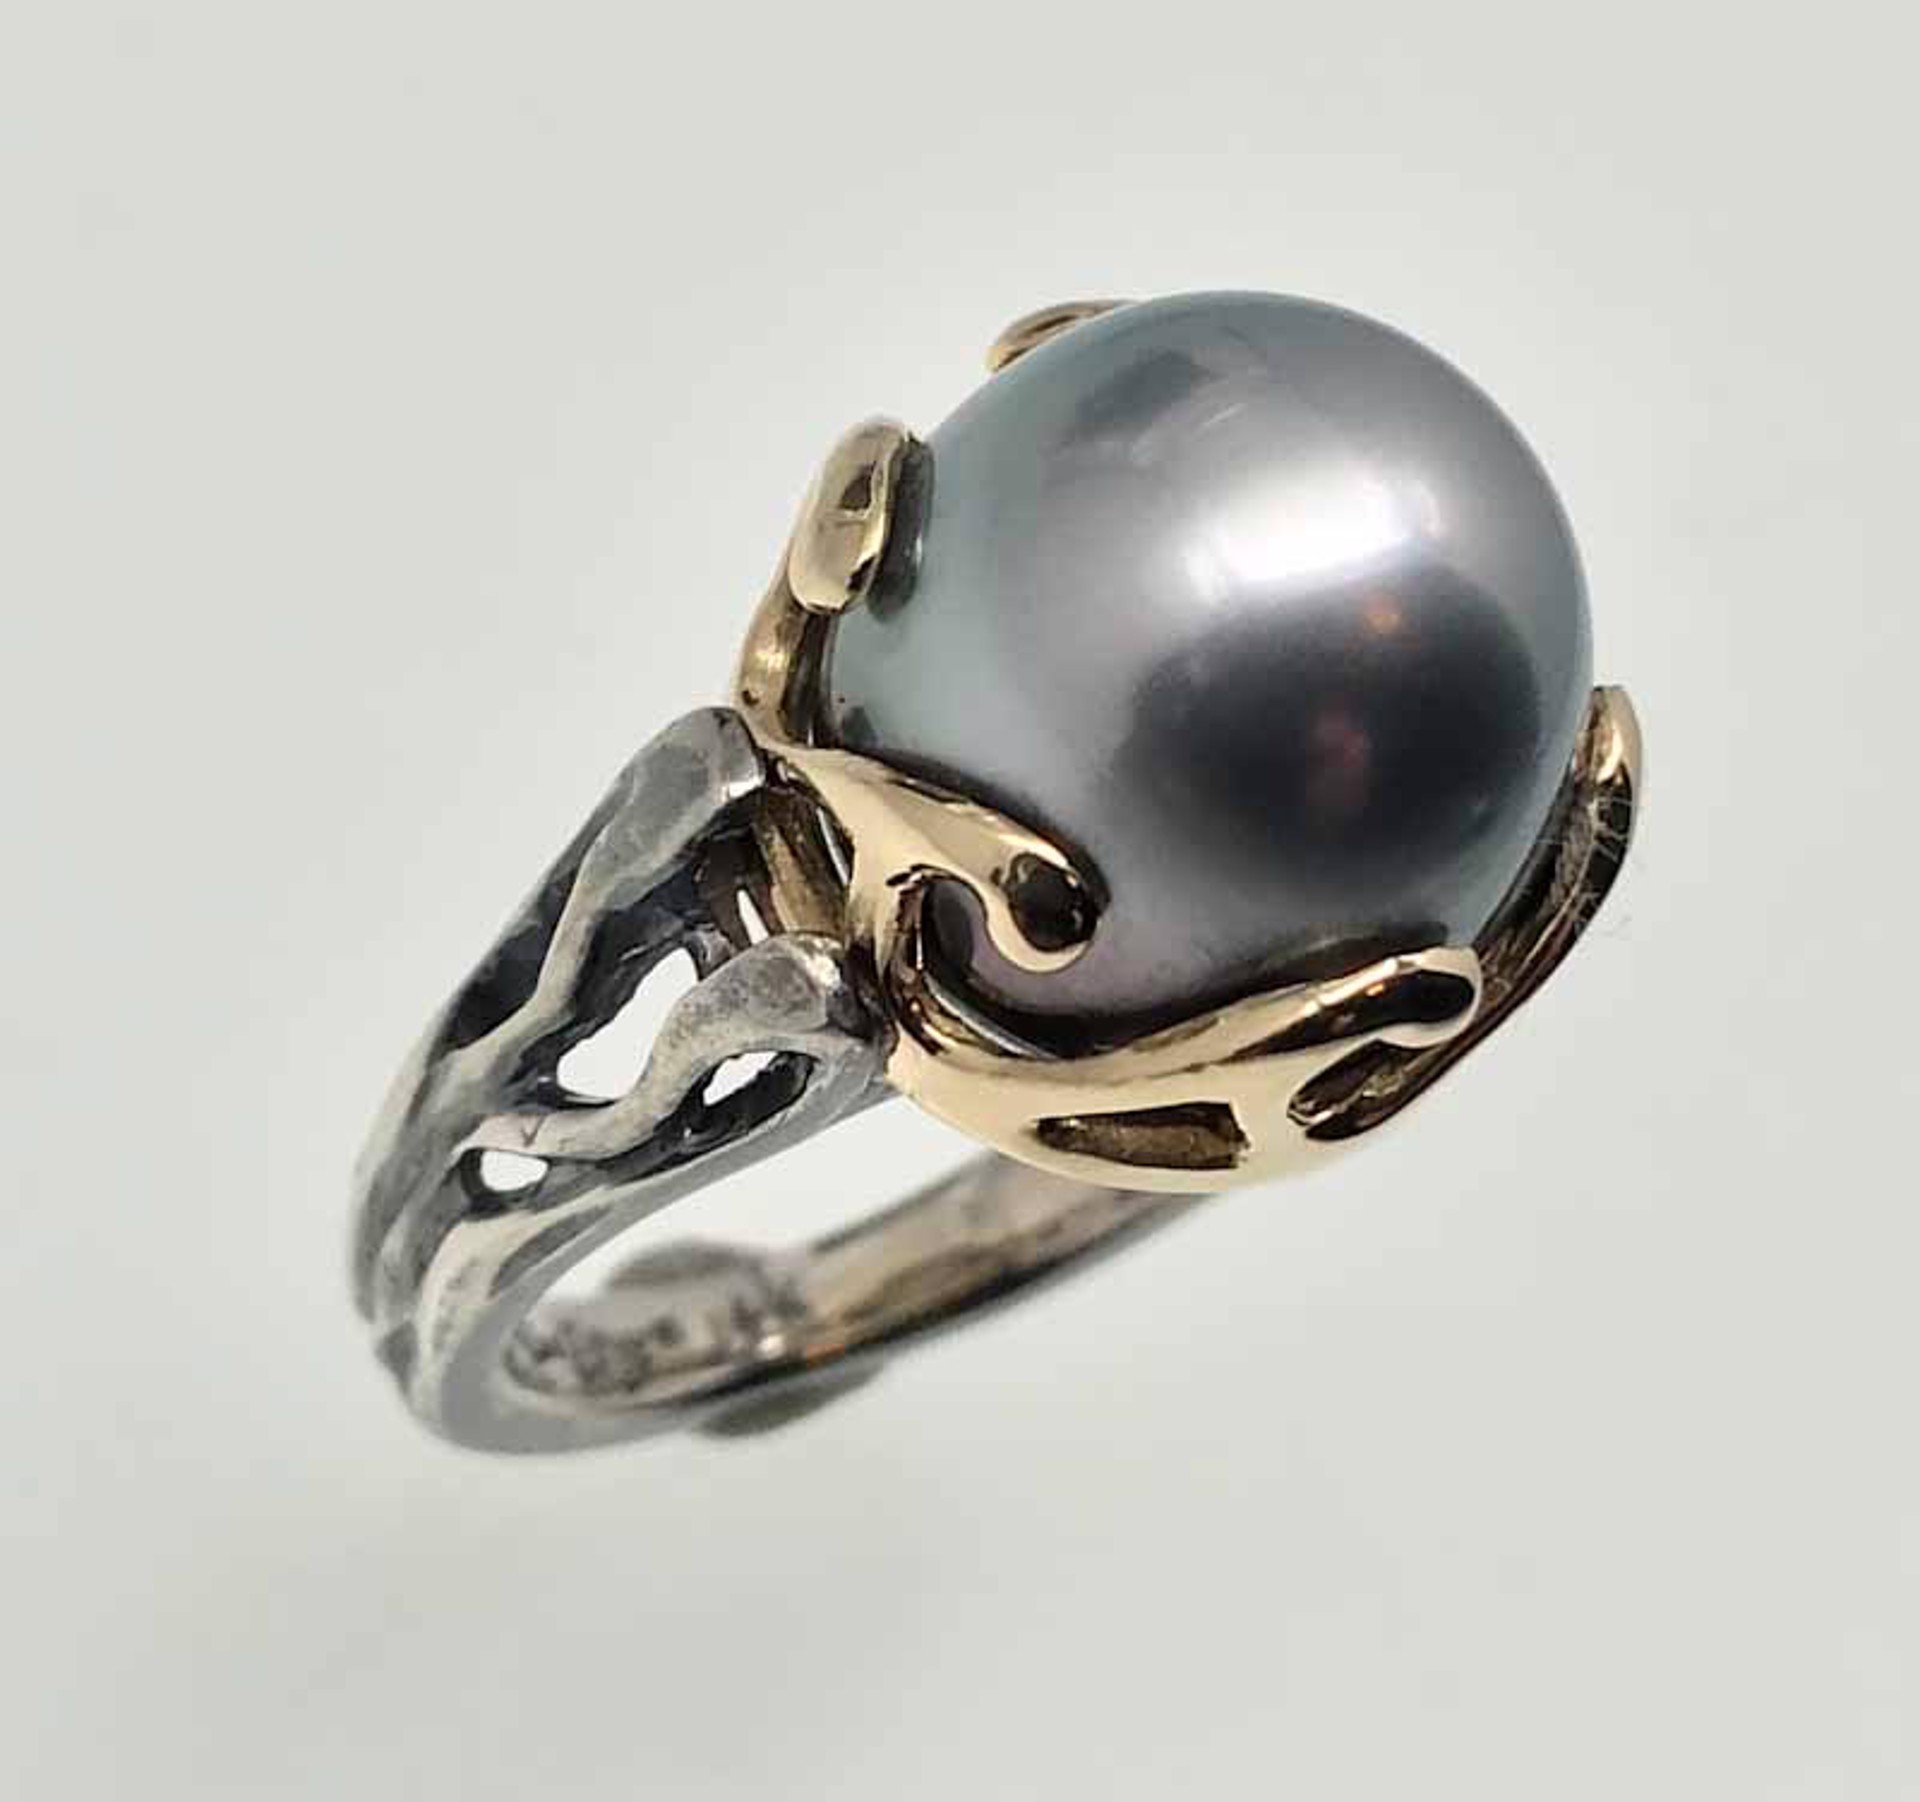 South Seas Pearl Ring by Thomas Tietze